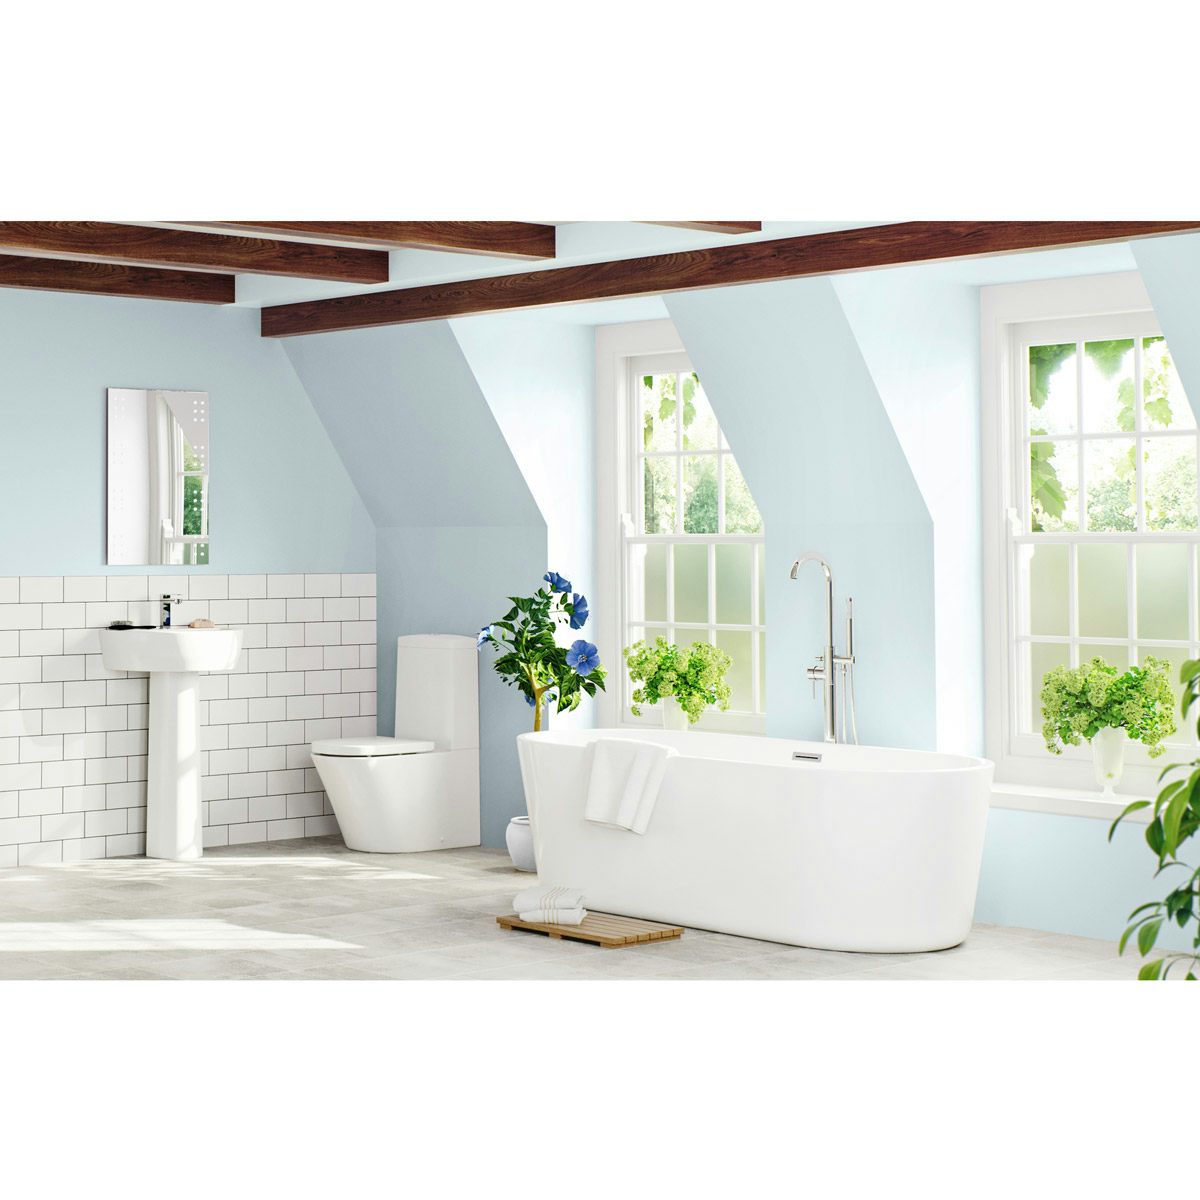 Mode Tate luxury bathroom suite with freestanding bath 1780 x 800